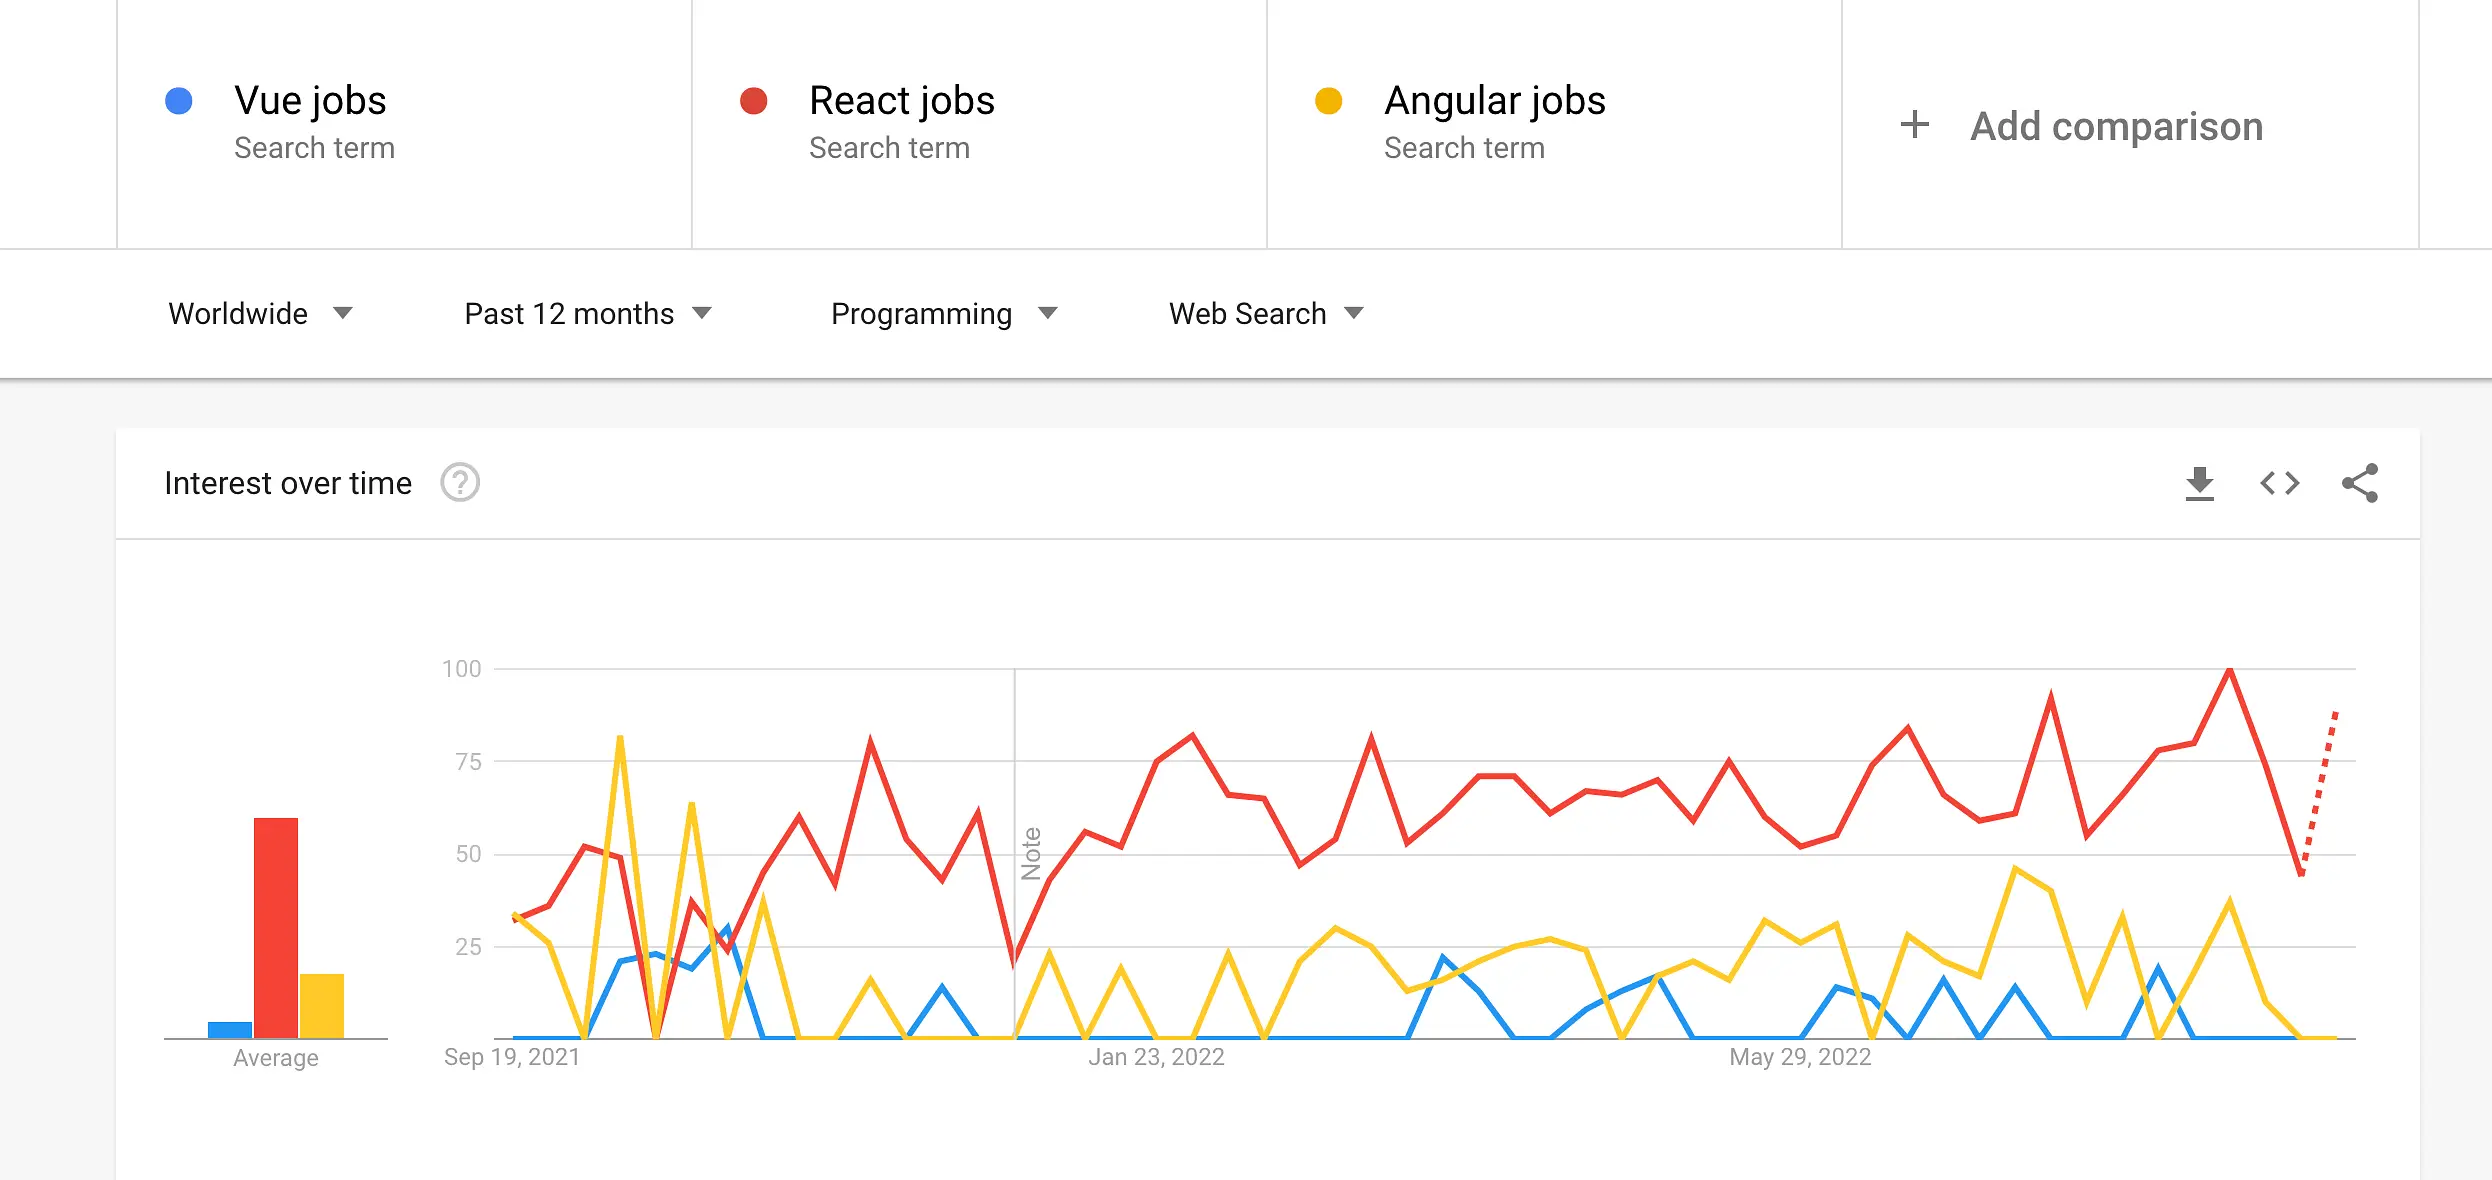 Vue React Angular Google Trend Comparison